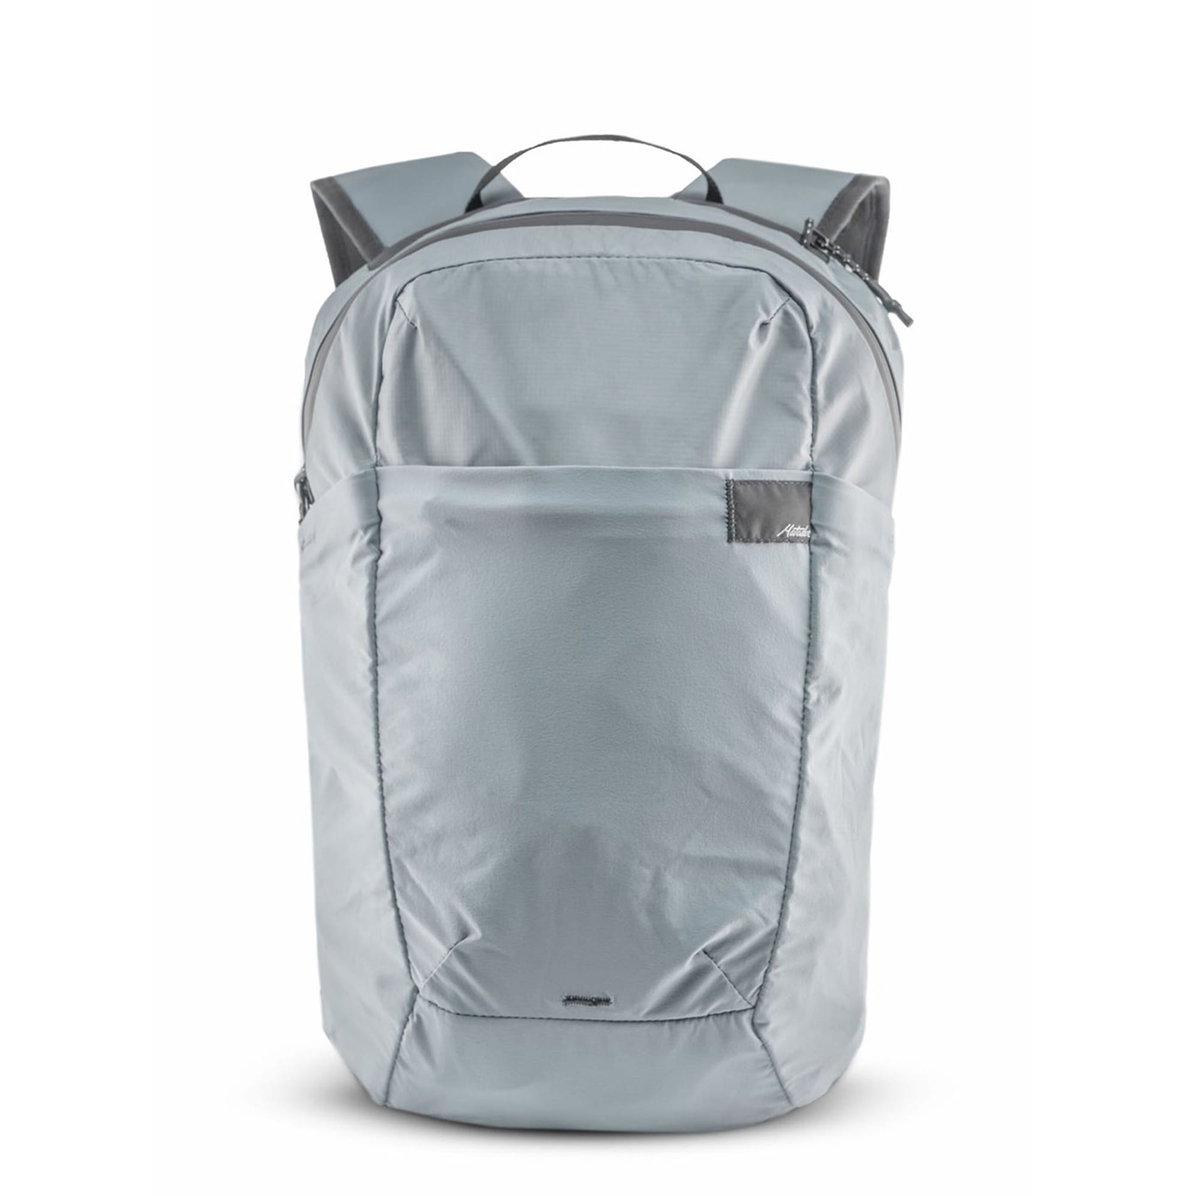 Zdjęcia - Plecak Matador  ultralekki miejski składany  ReFraction Packable Backpack 16 